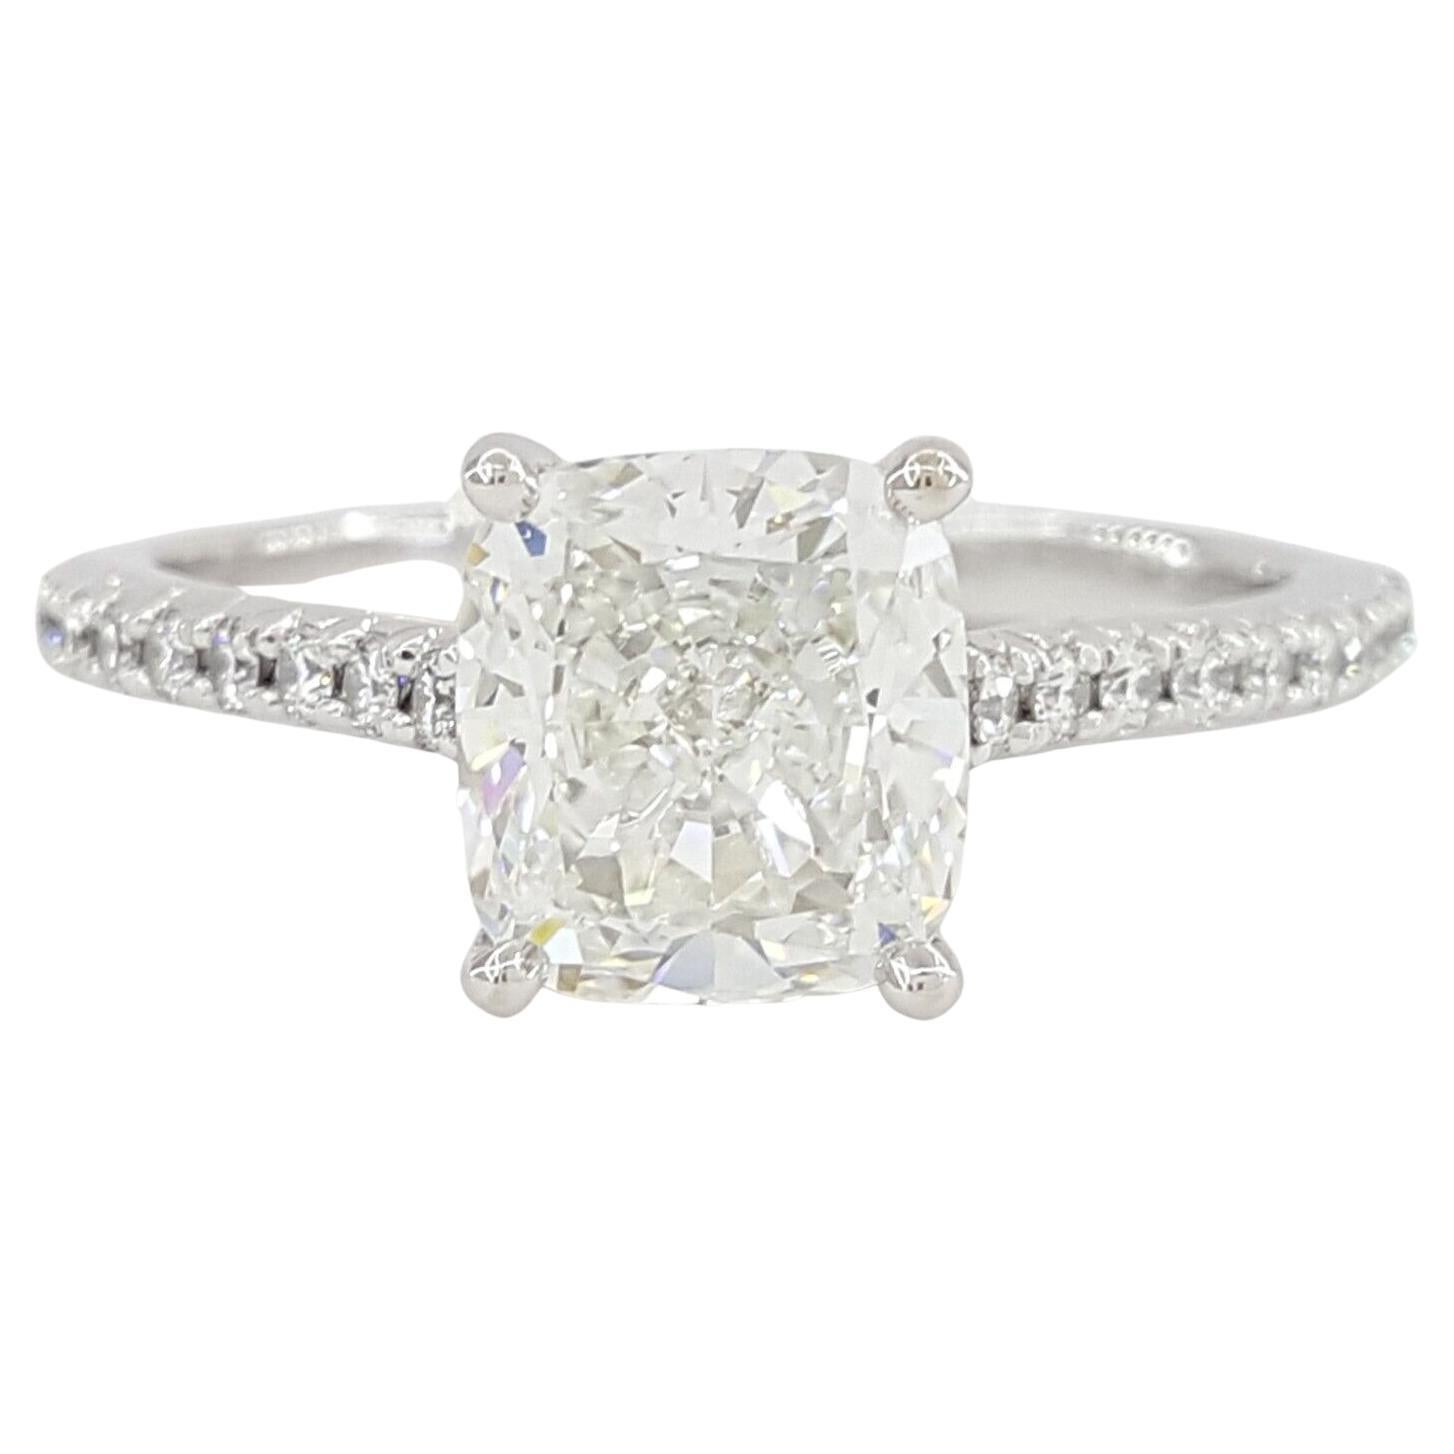 Tiffany & Co. Novo Platinum Cushion Brilliant Cut Diamond Ring